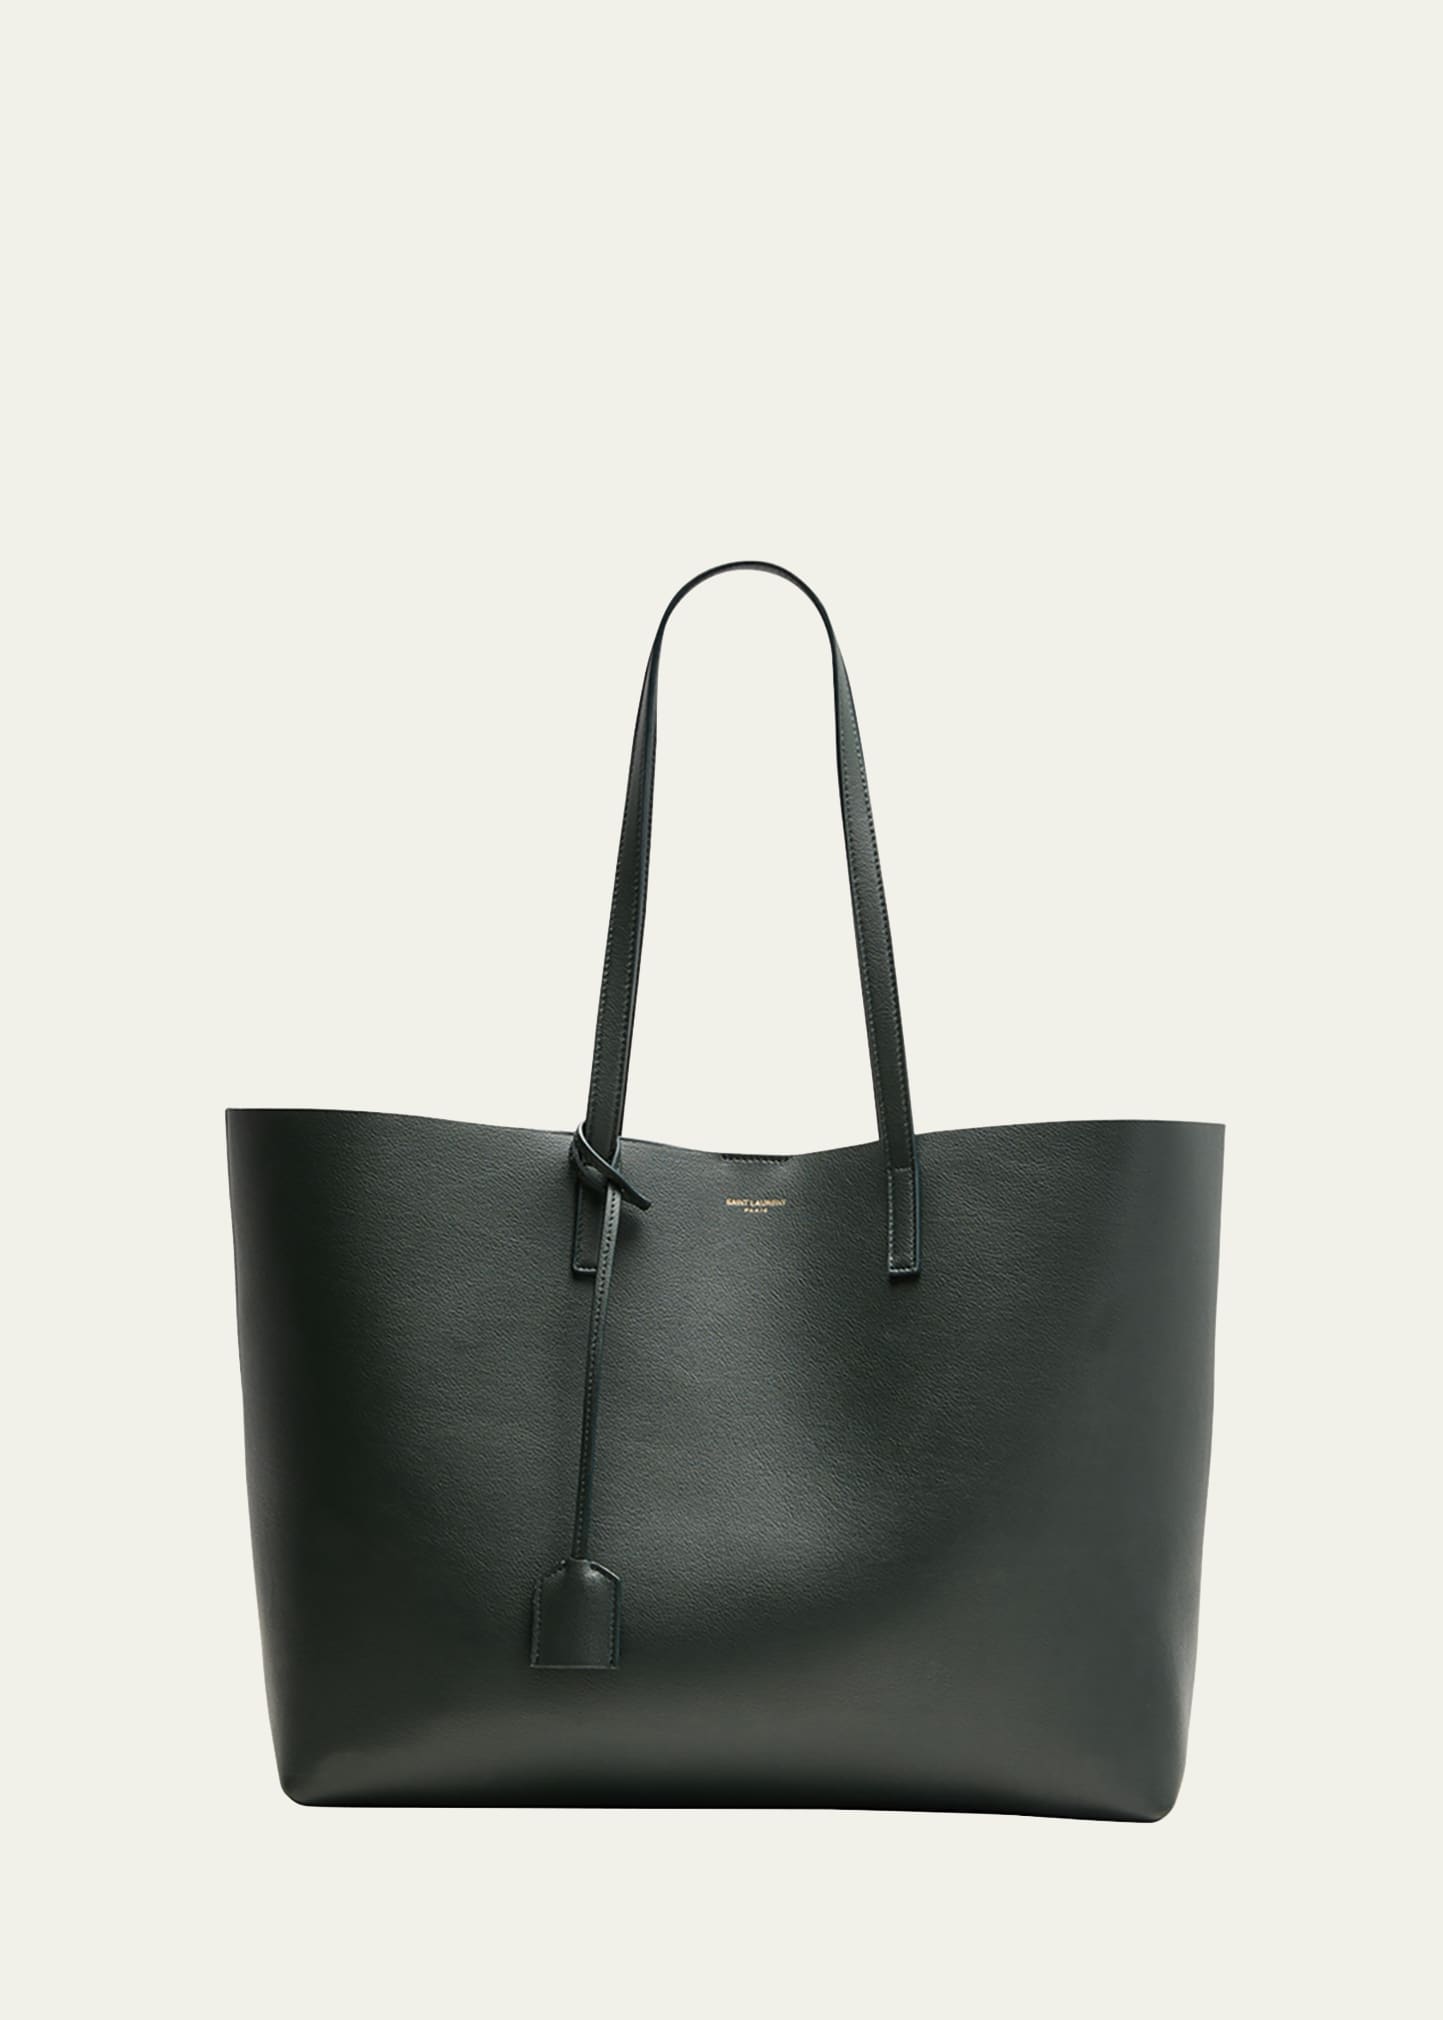 NEW YSL Saint Laurent Leather E/W Shopper Tote Bag In White & Gold Hardware